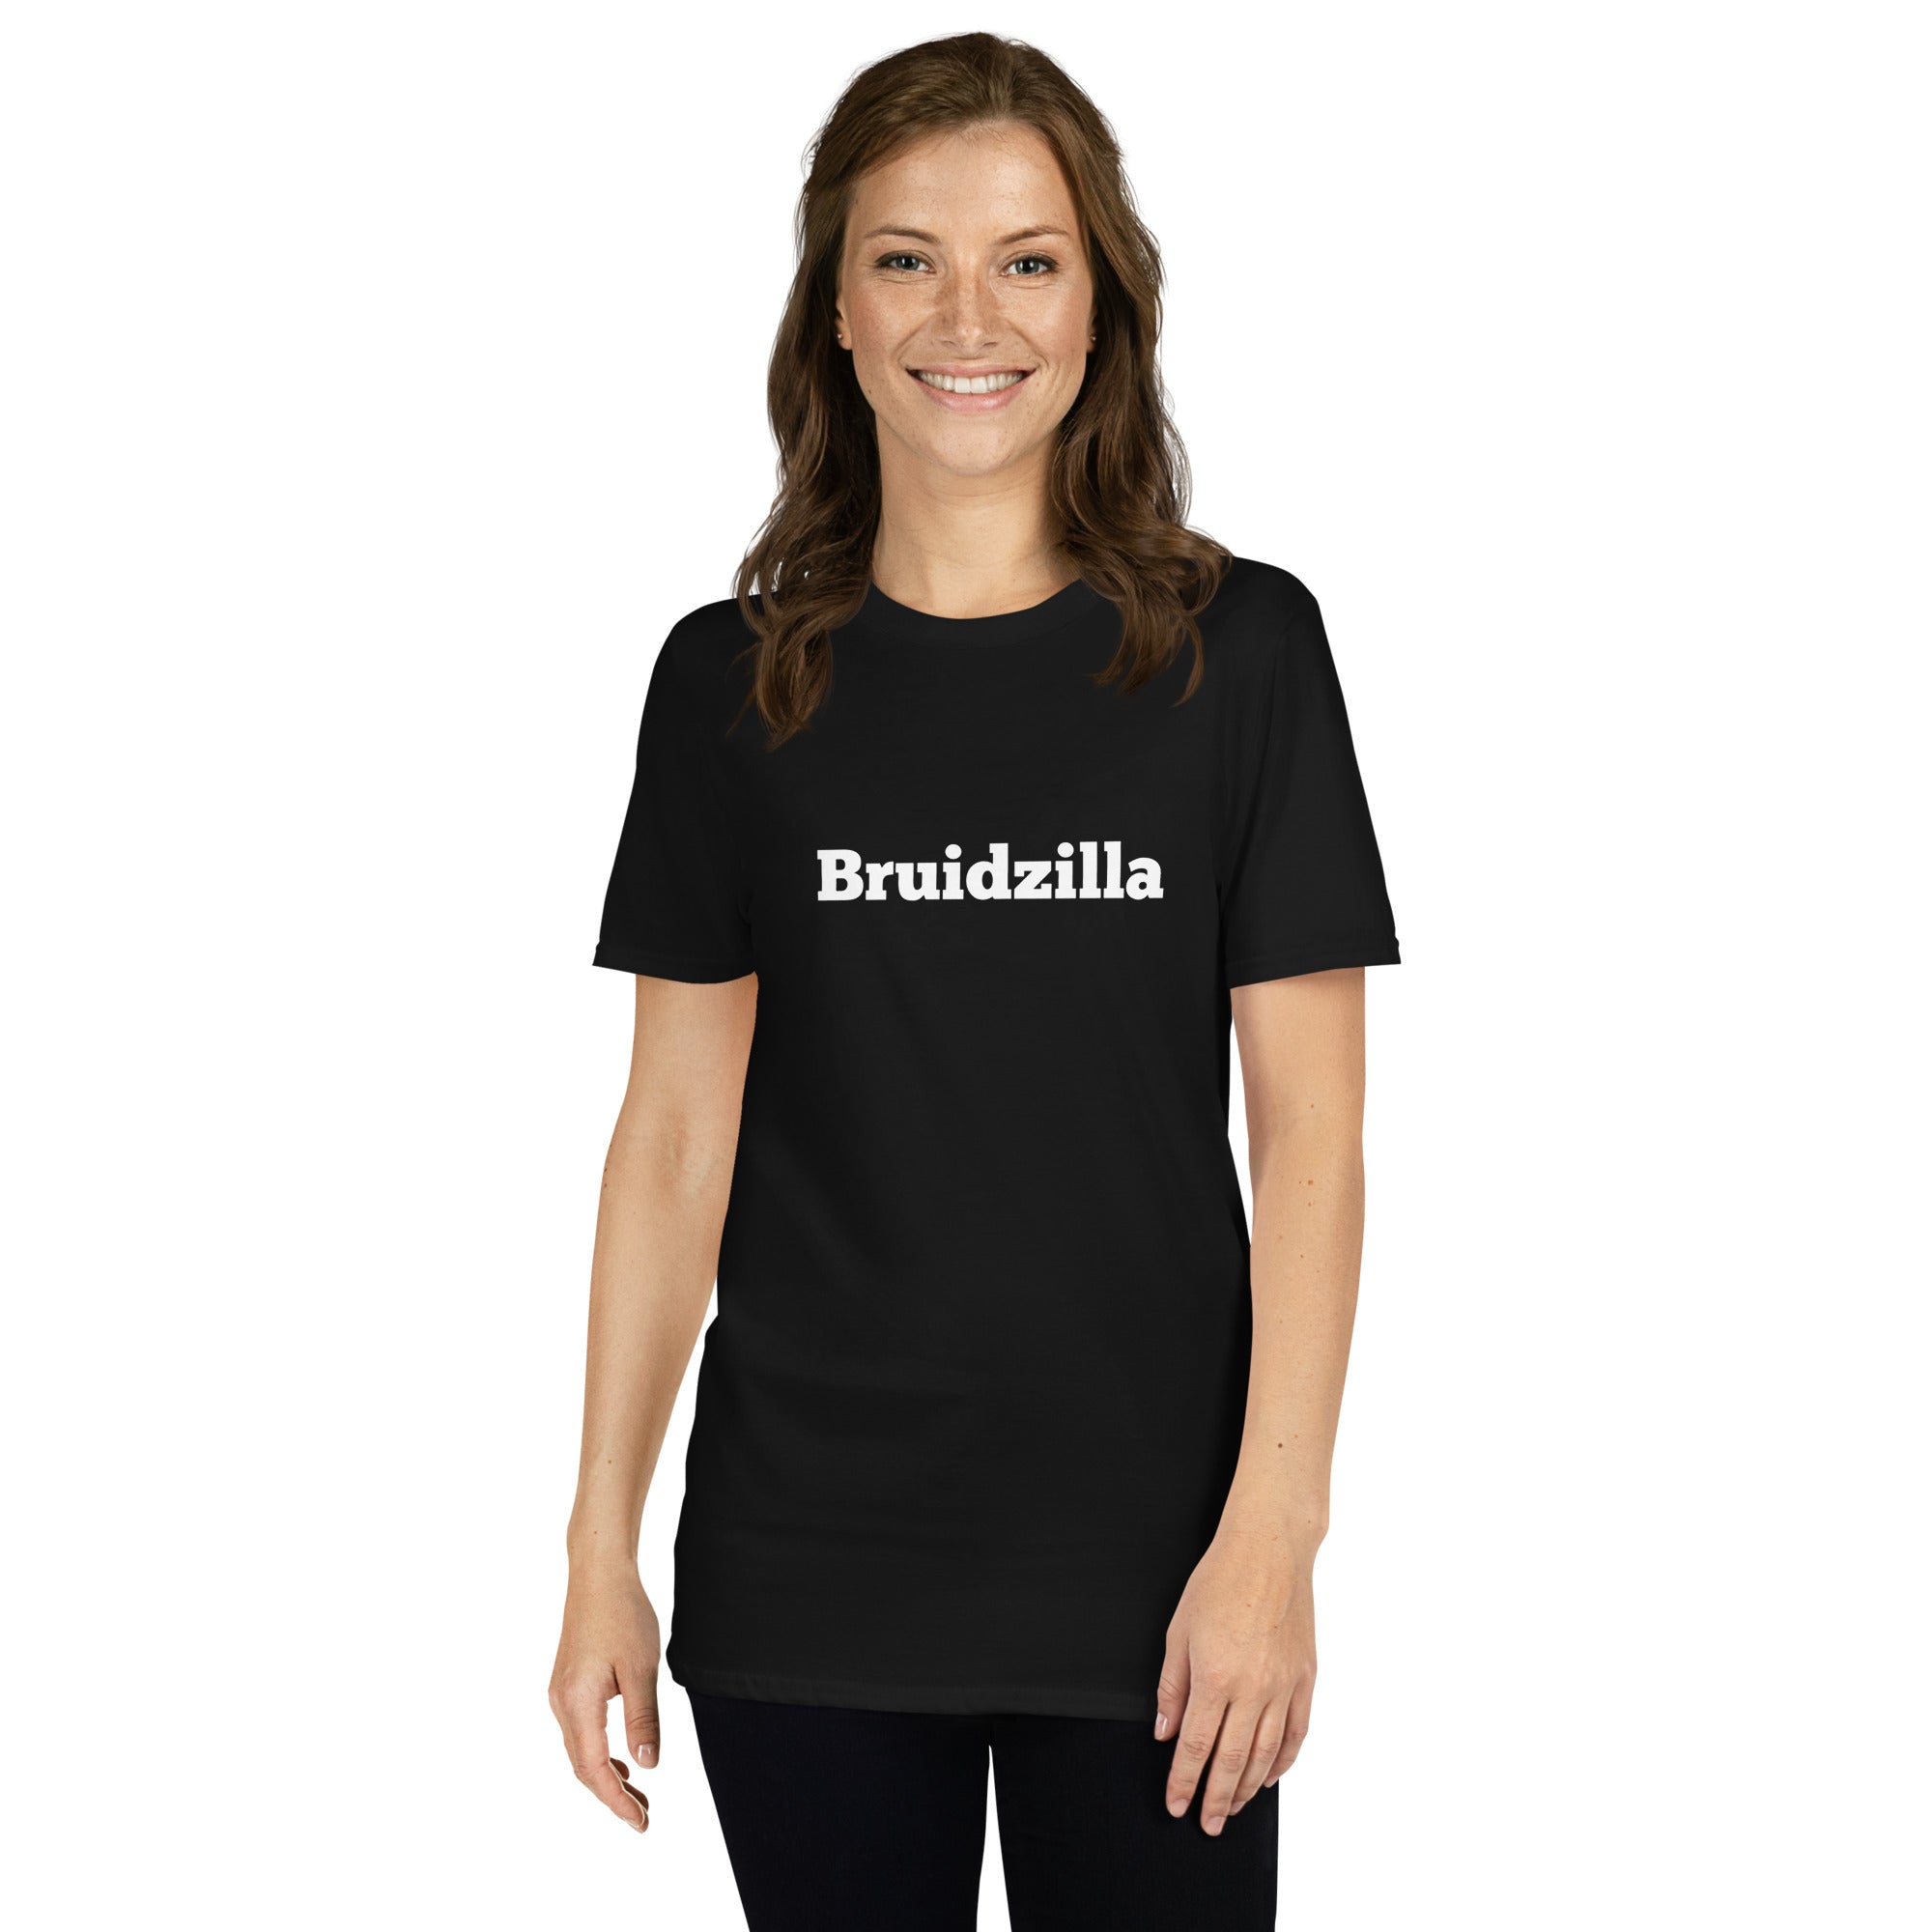 Bruidzilla - Vrijgezellenfeest shirt - DutchValues